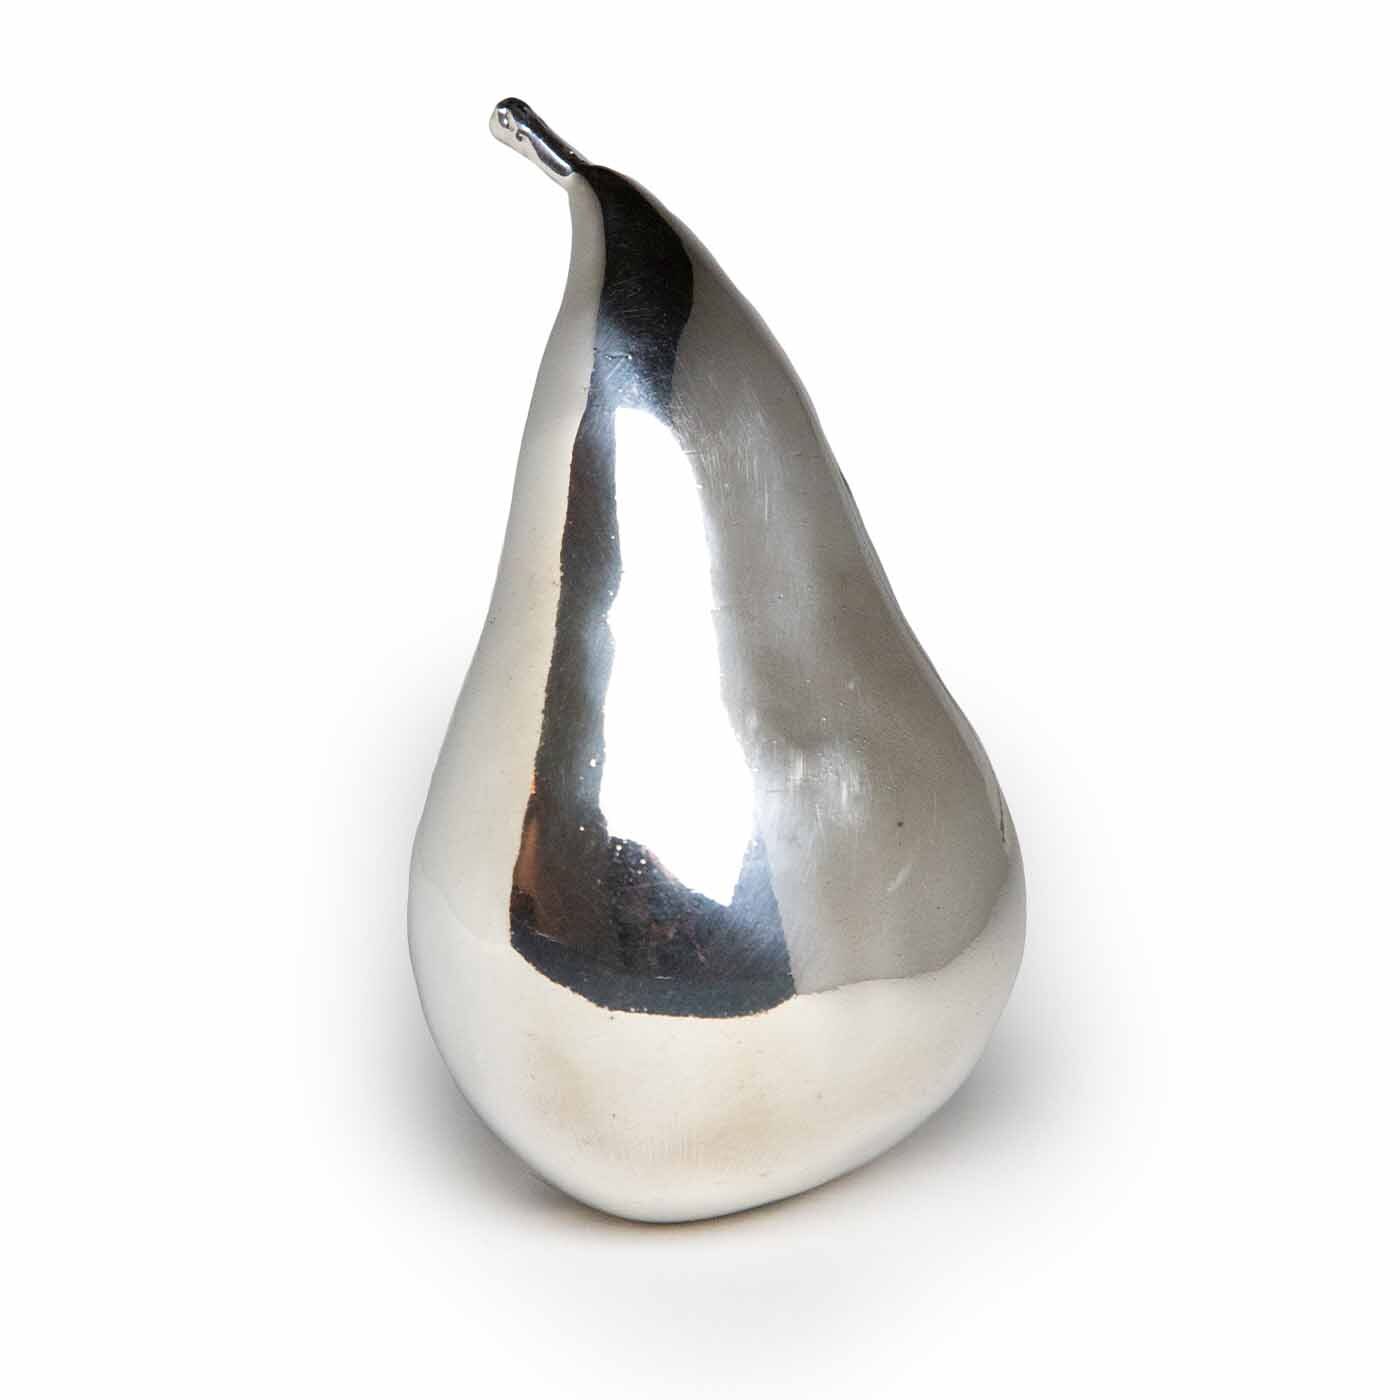 Silver Pear